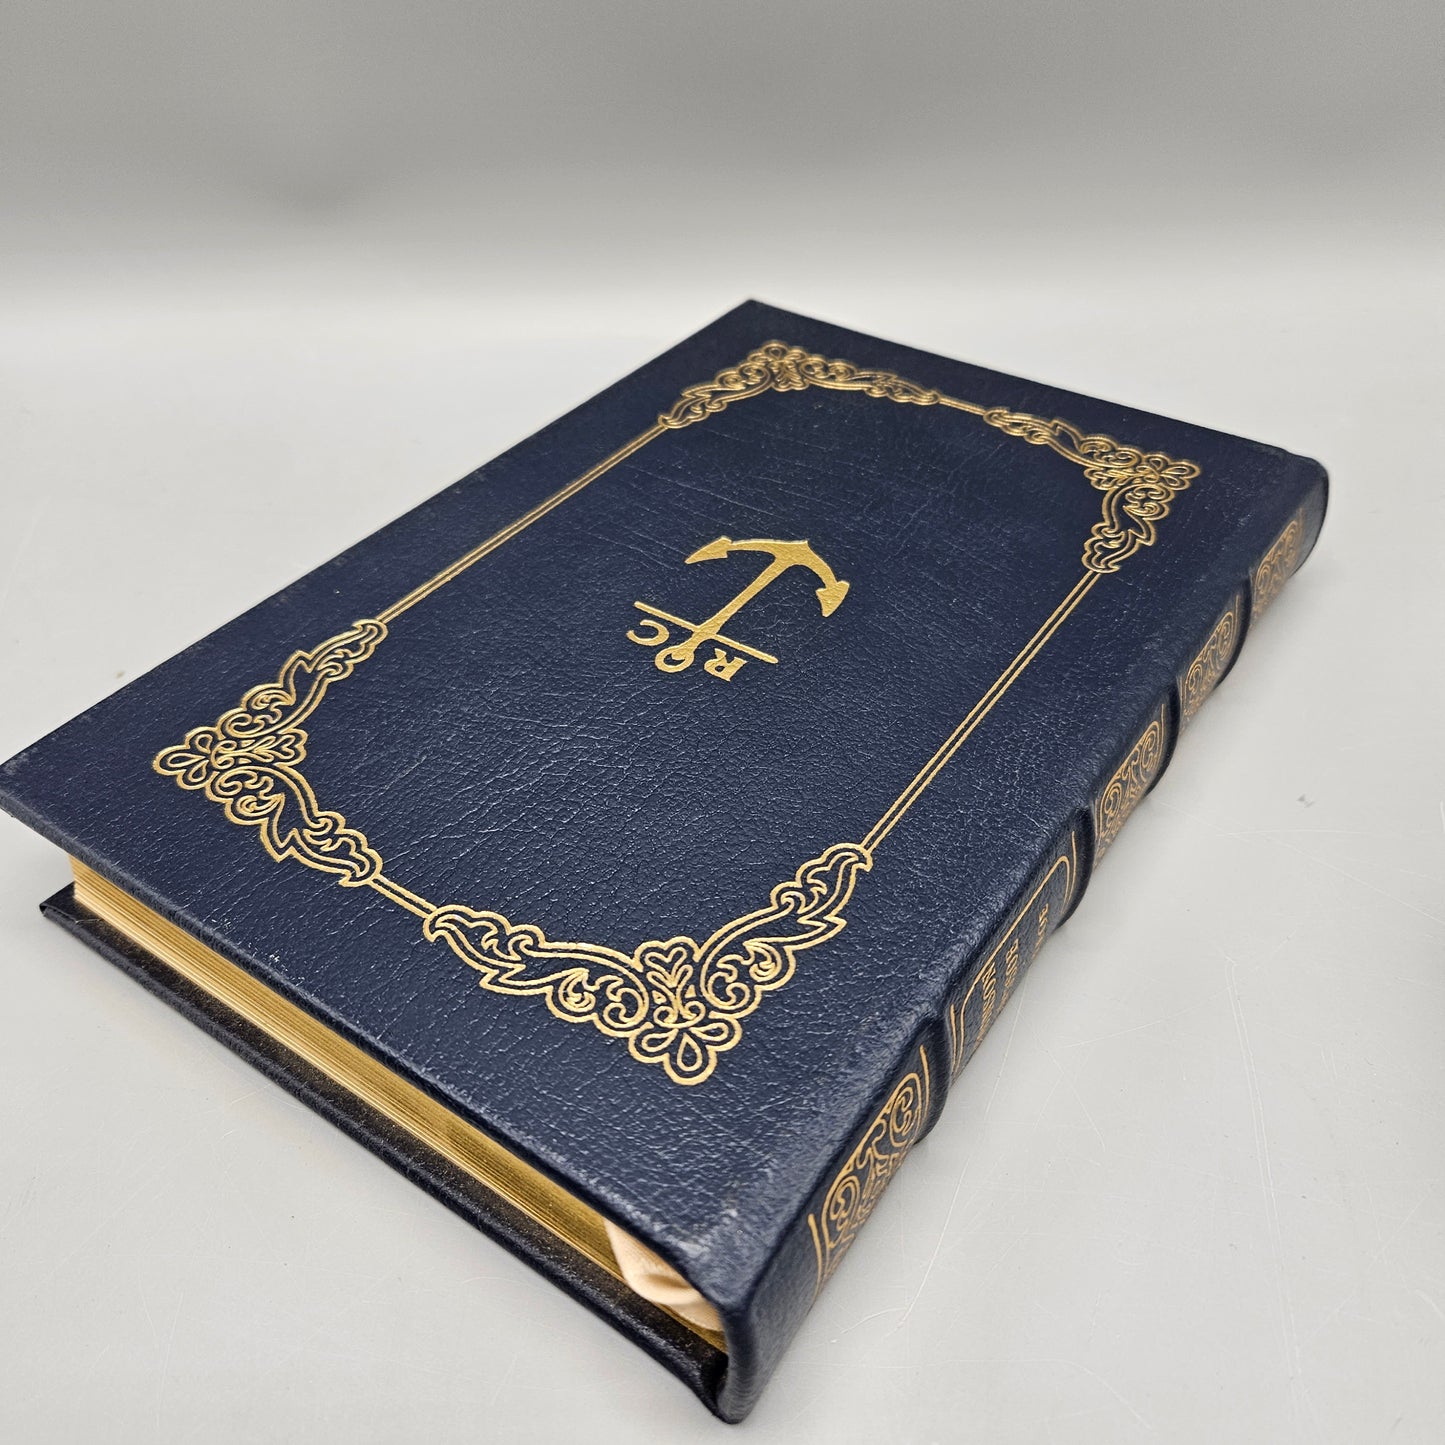 Leatherbound Book - Daniel Dafoe "Robinson Crusoe" Easton Press